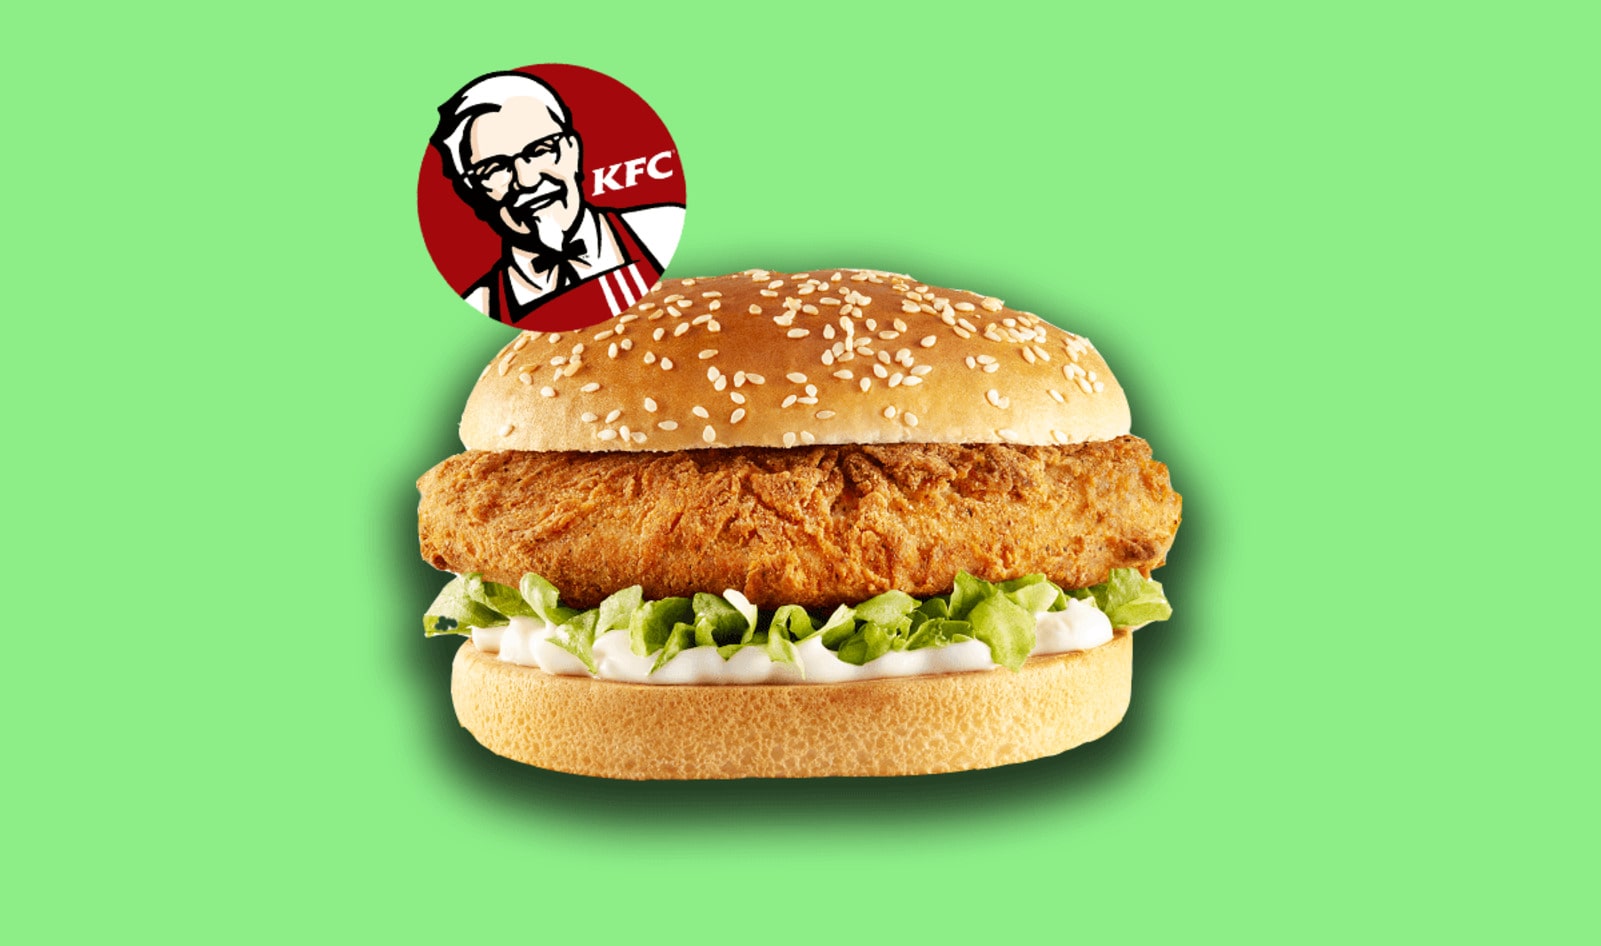 KFC Launches Vegan Quorn-Based “Imposter Burger” in UK